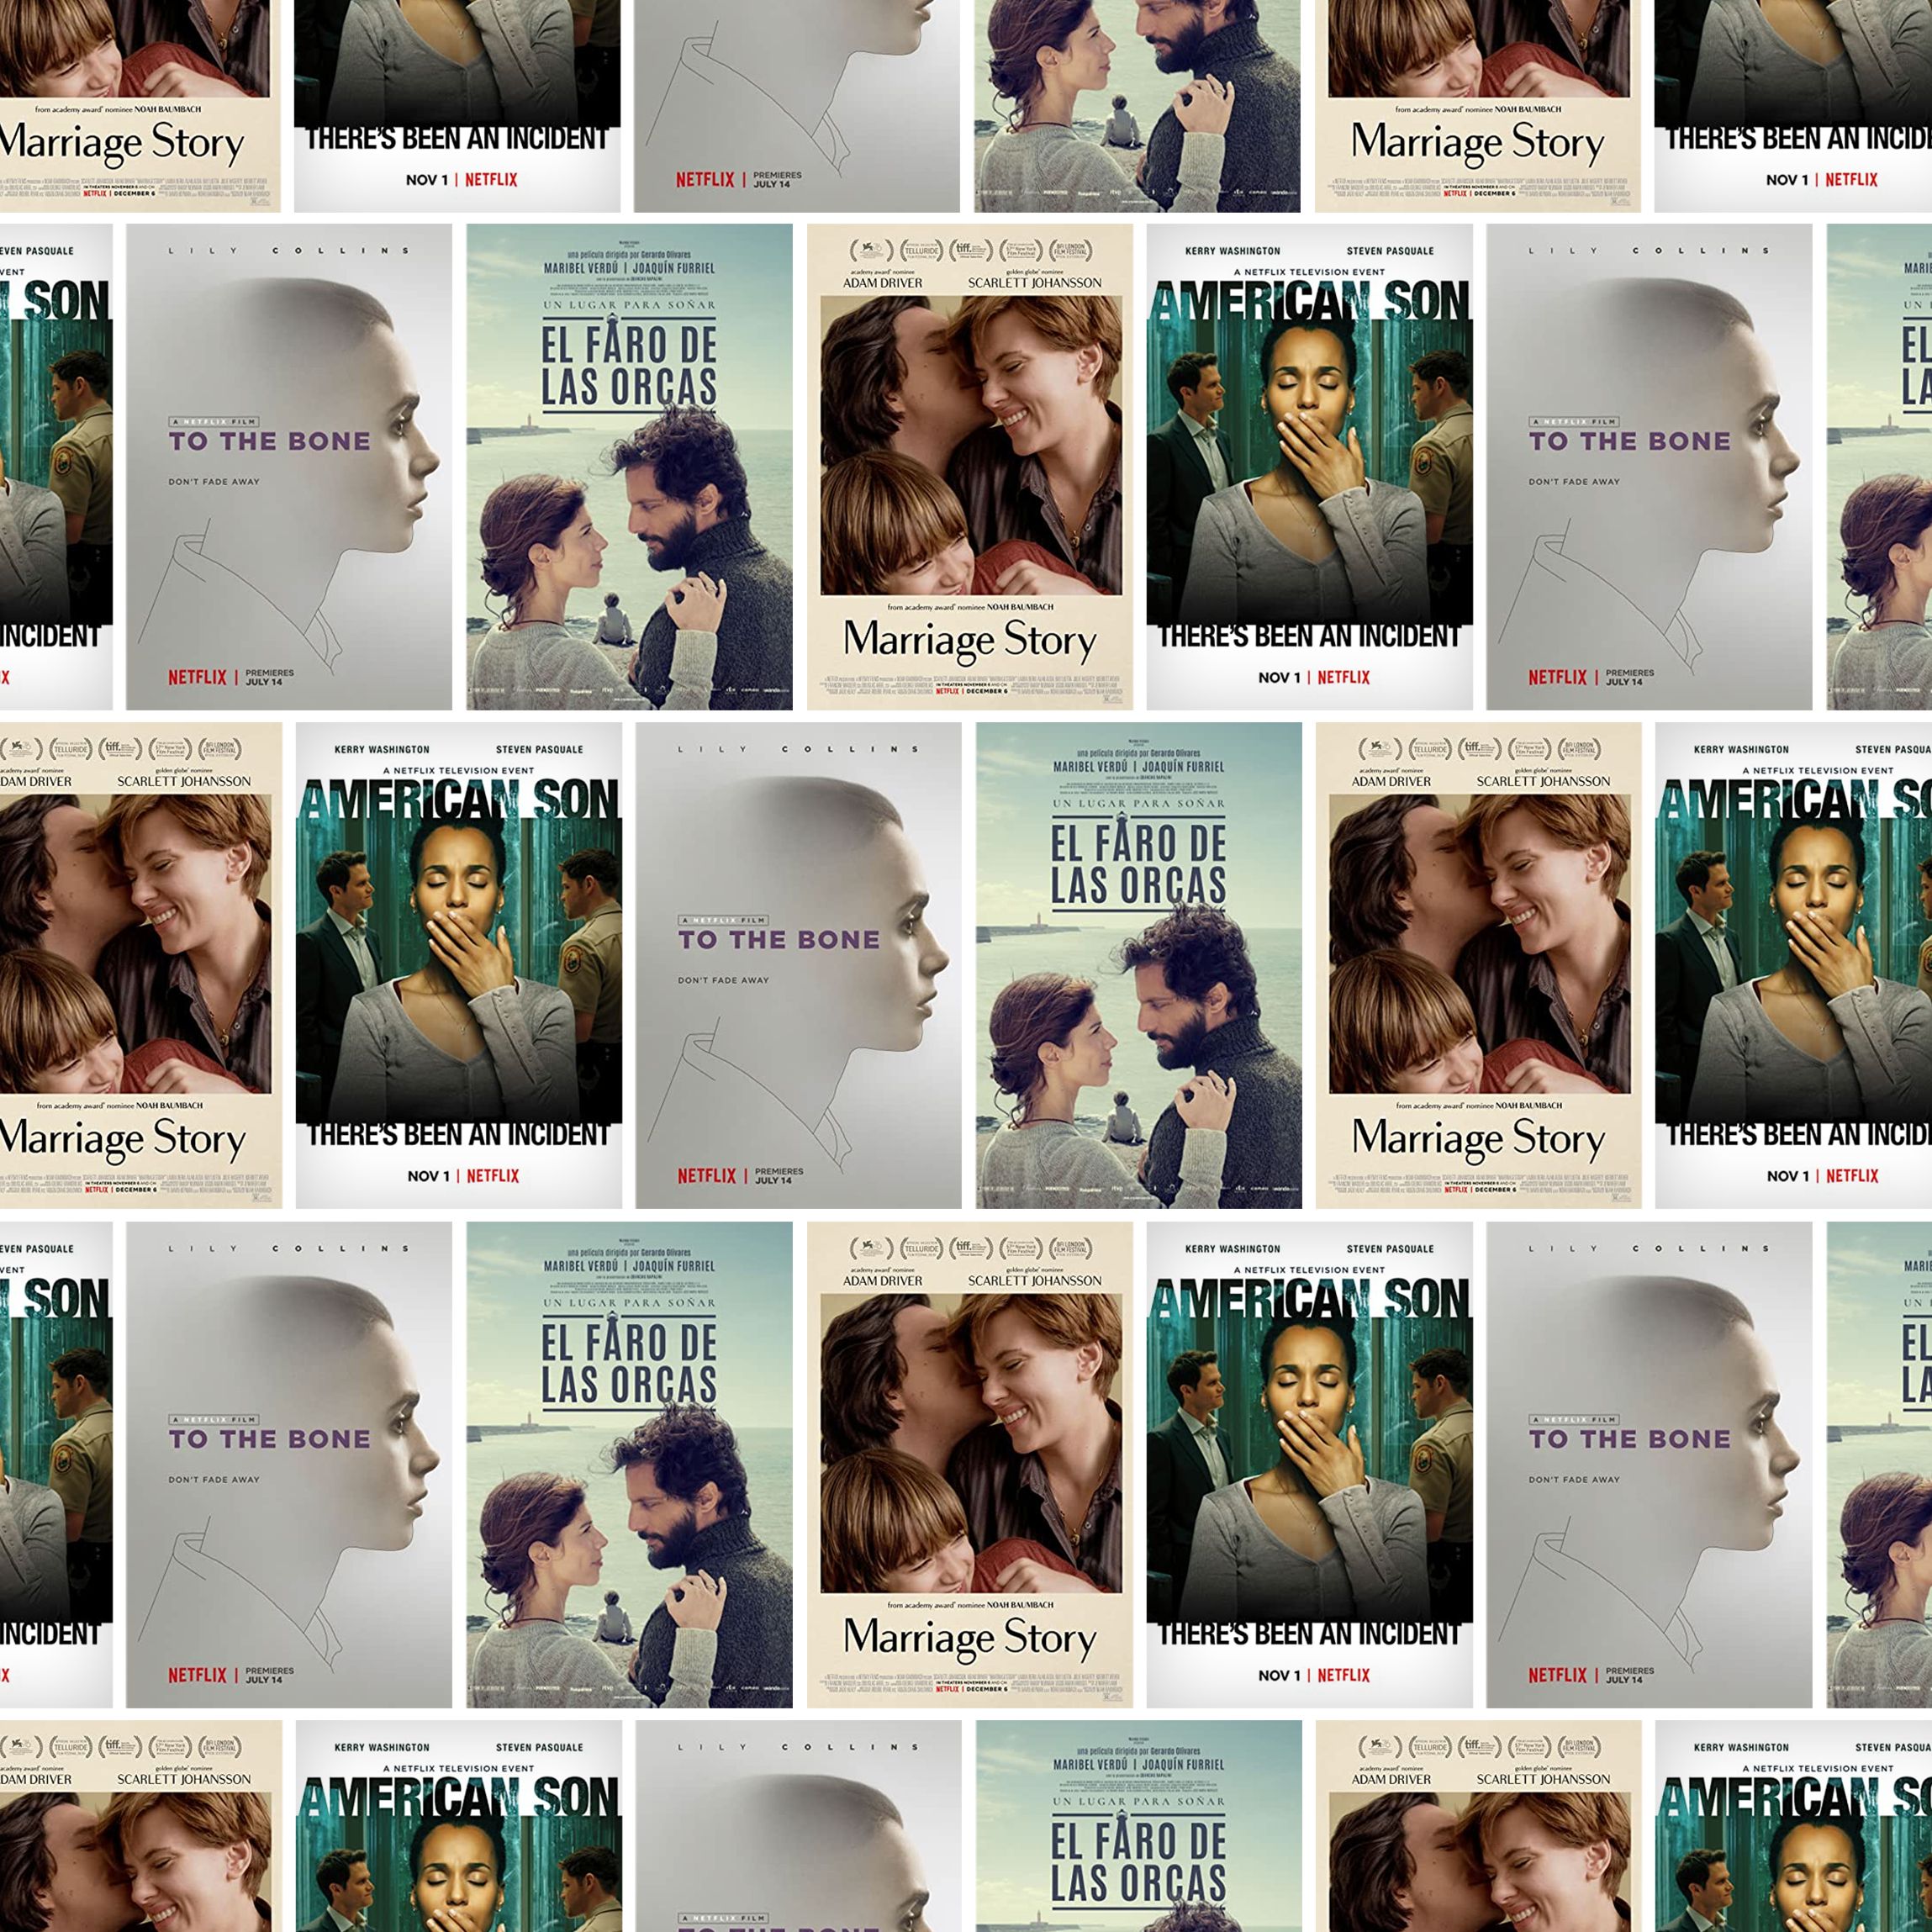 10 Of The Best Romance Movies on Netflix - 2022 